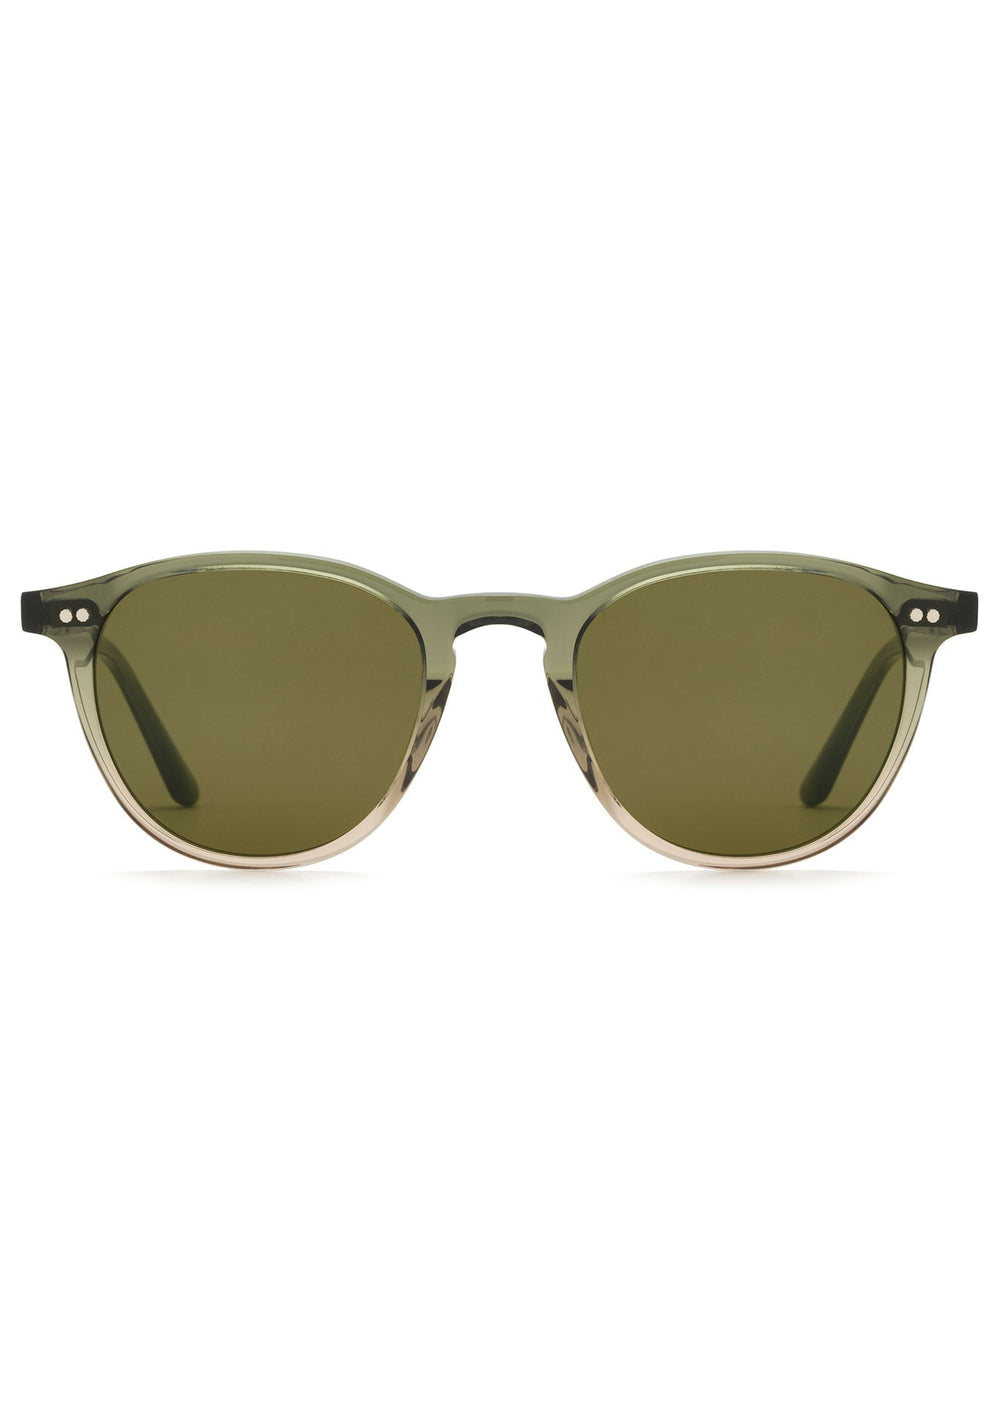 KREWE SUNGLASSES - LANDRY | Verde handcrafted, luxury green acetate round sunglasses